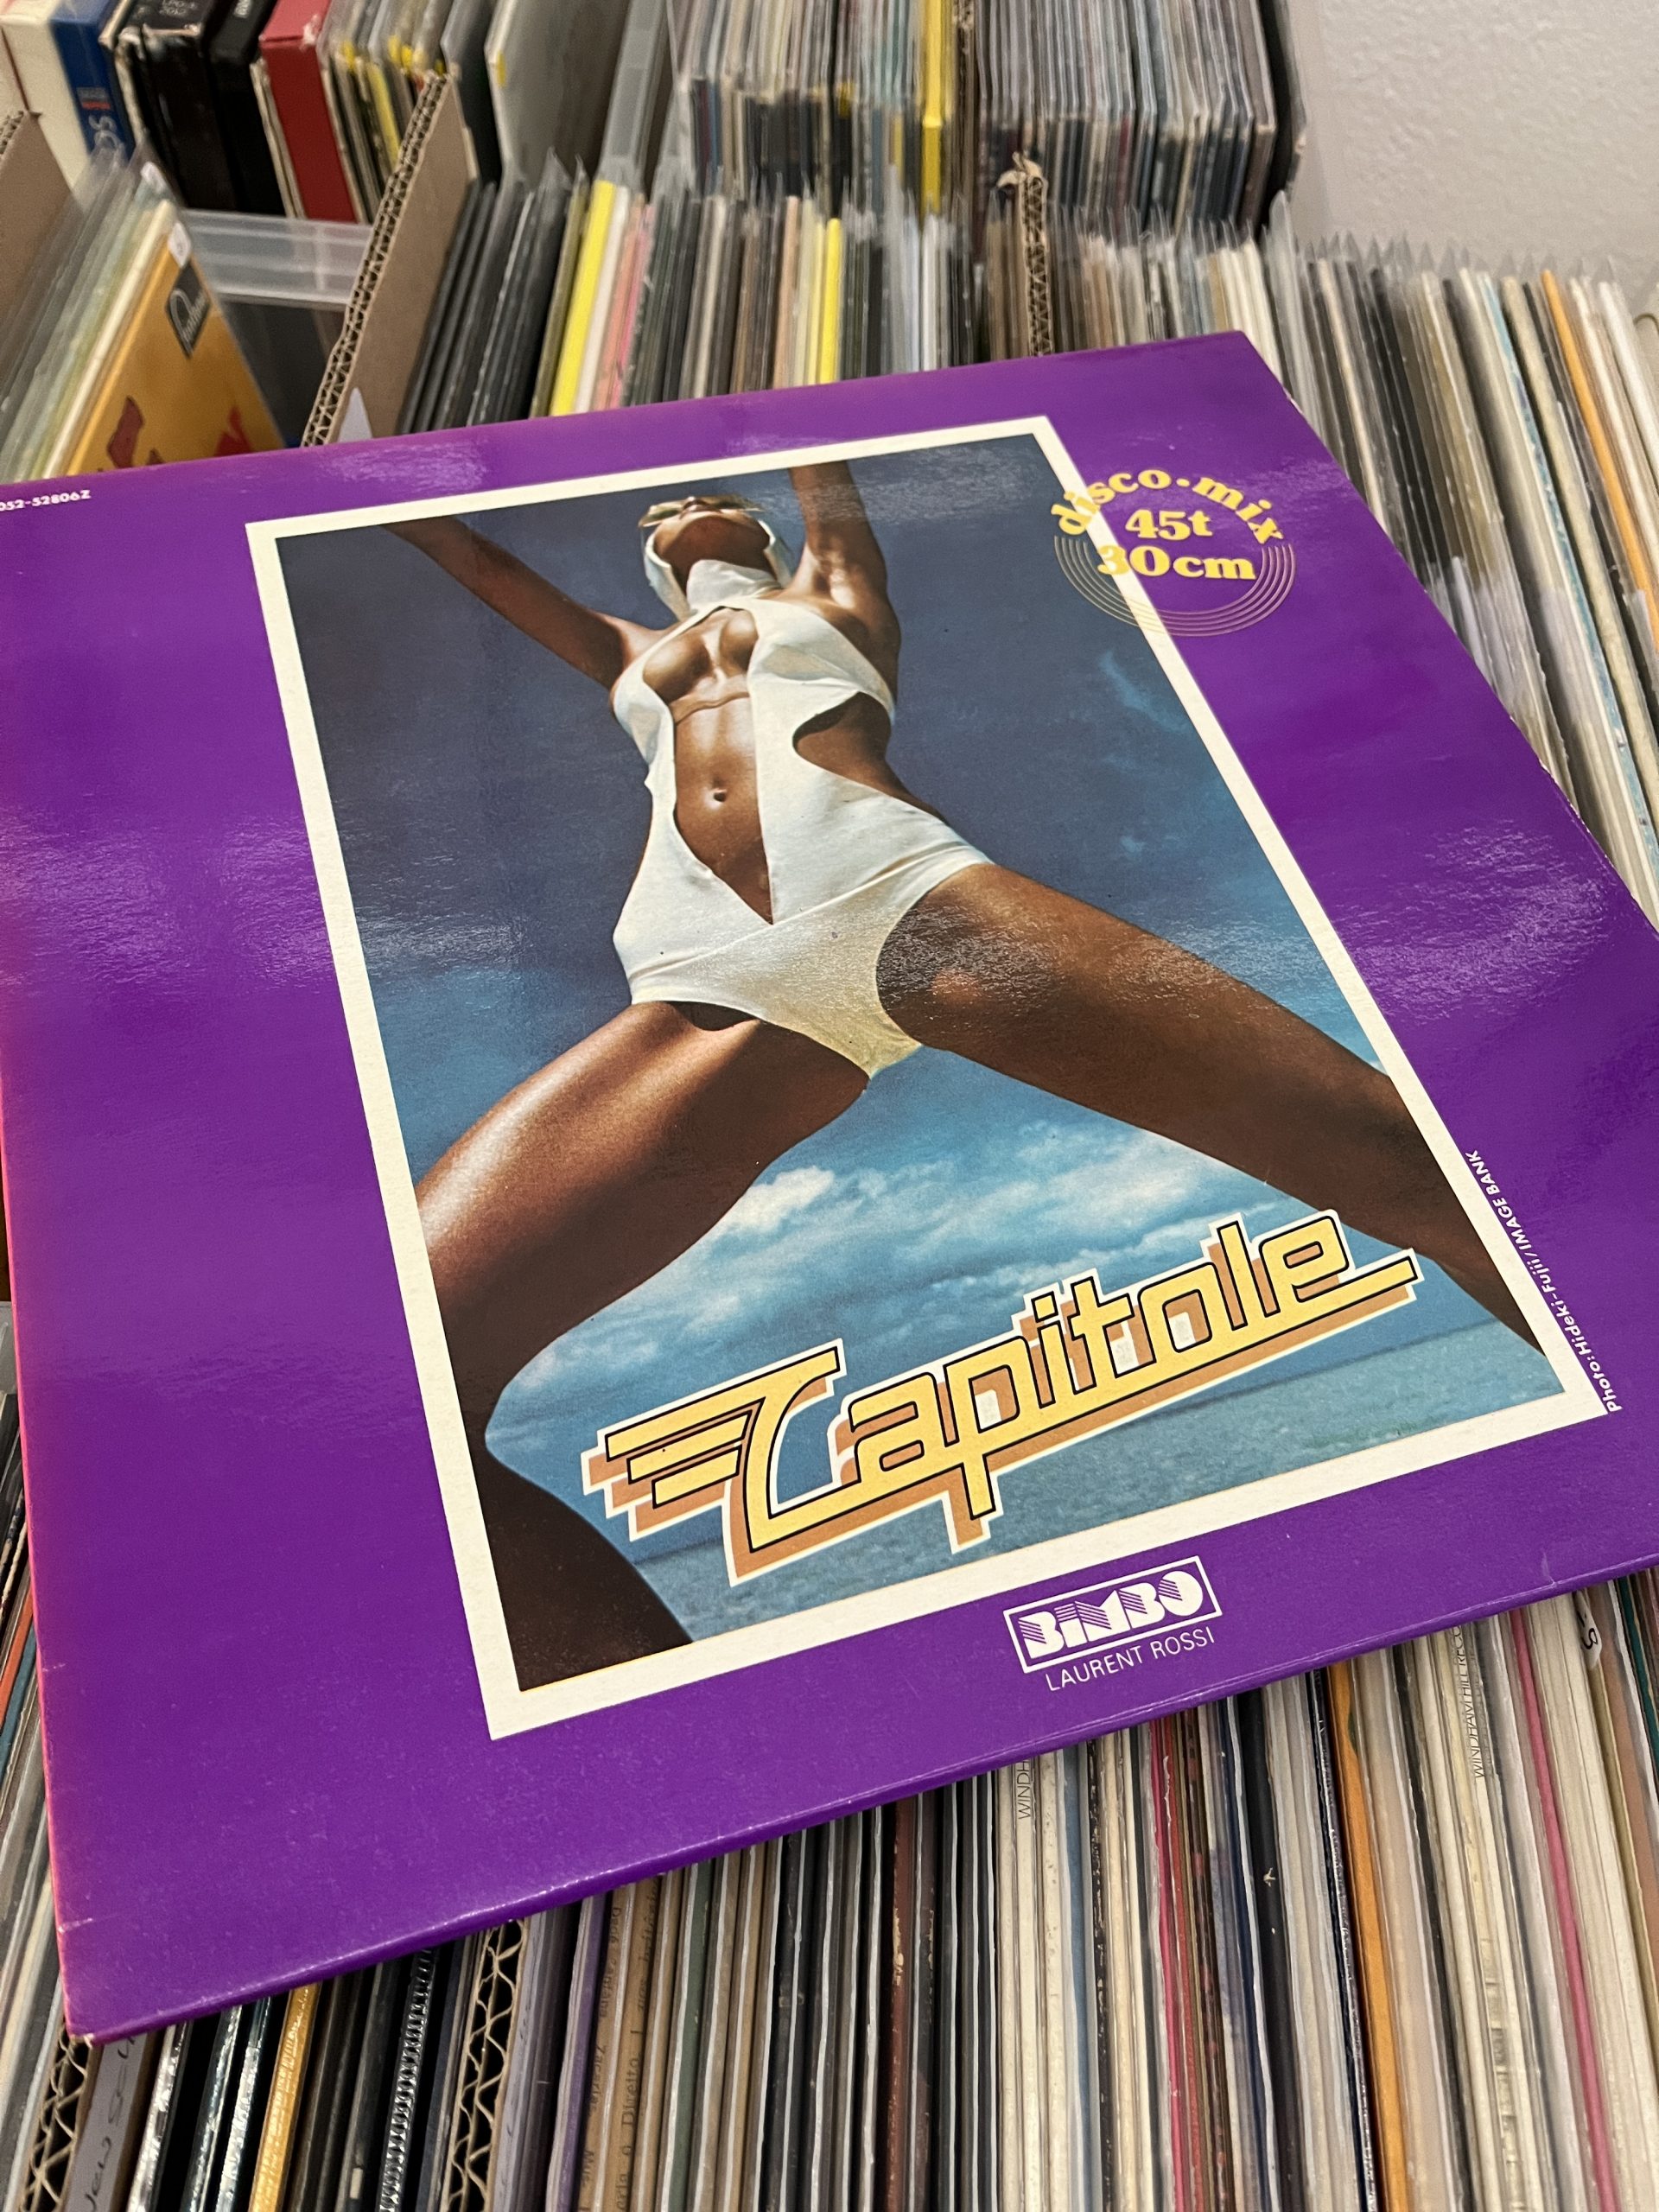 Capitole – disco mix